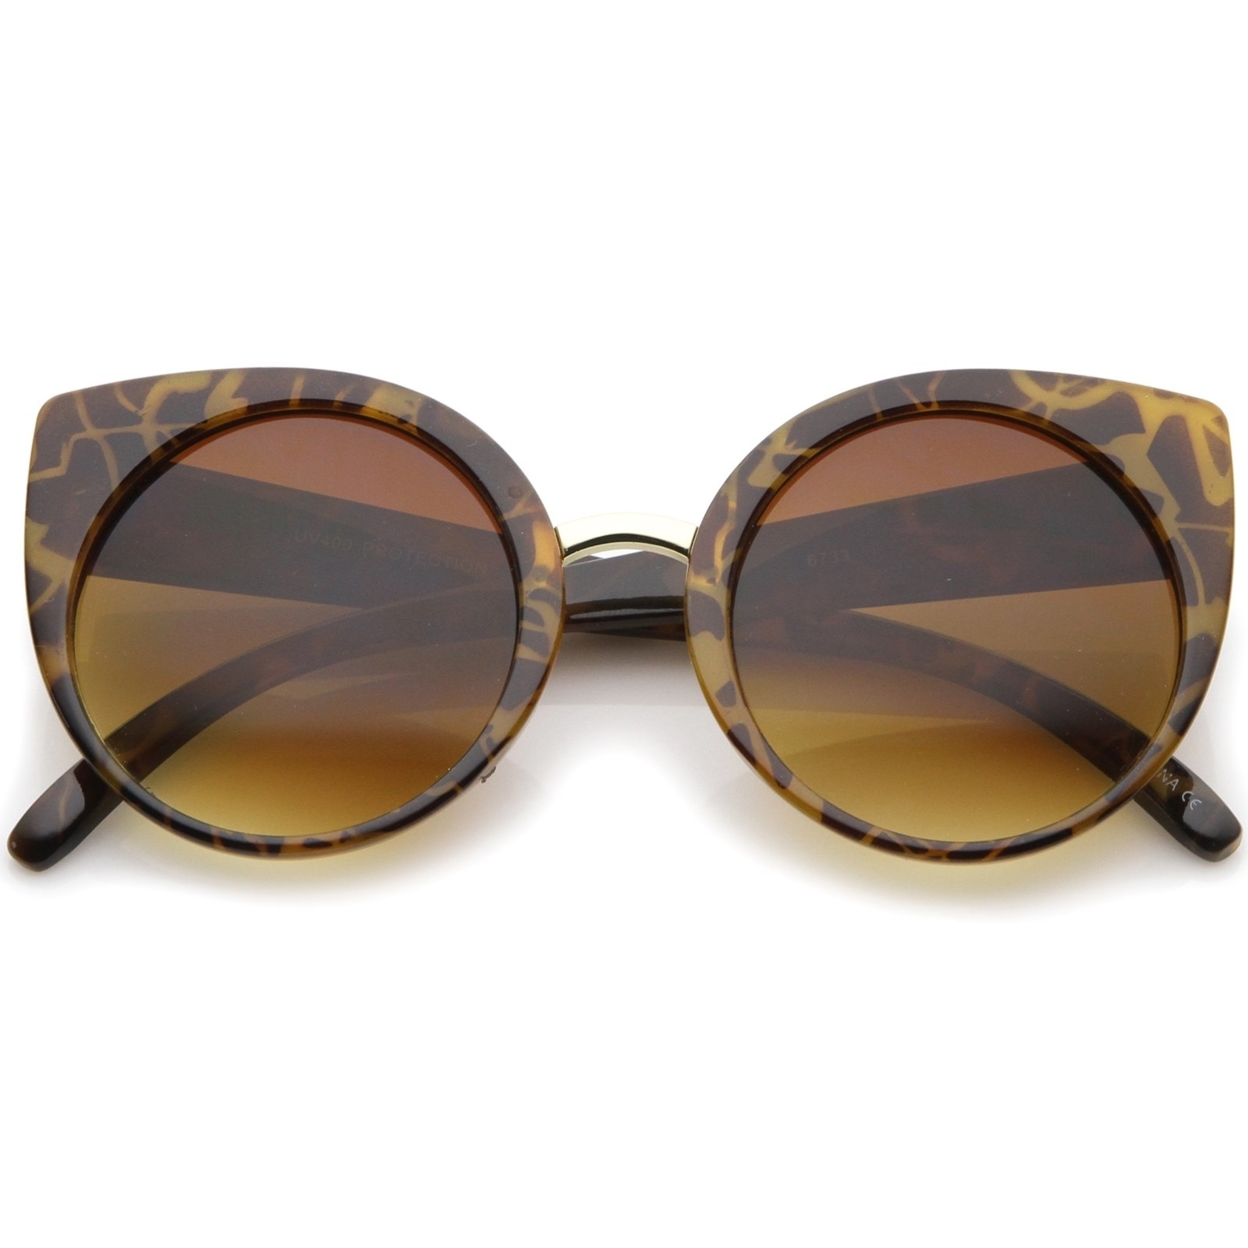 Women's High Fashion Oversize Round Lens Cat Eye Sunglasses 55mm - Black-Gold / Smoke